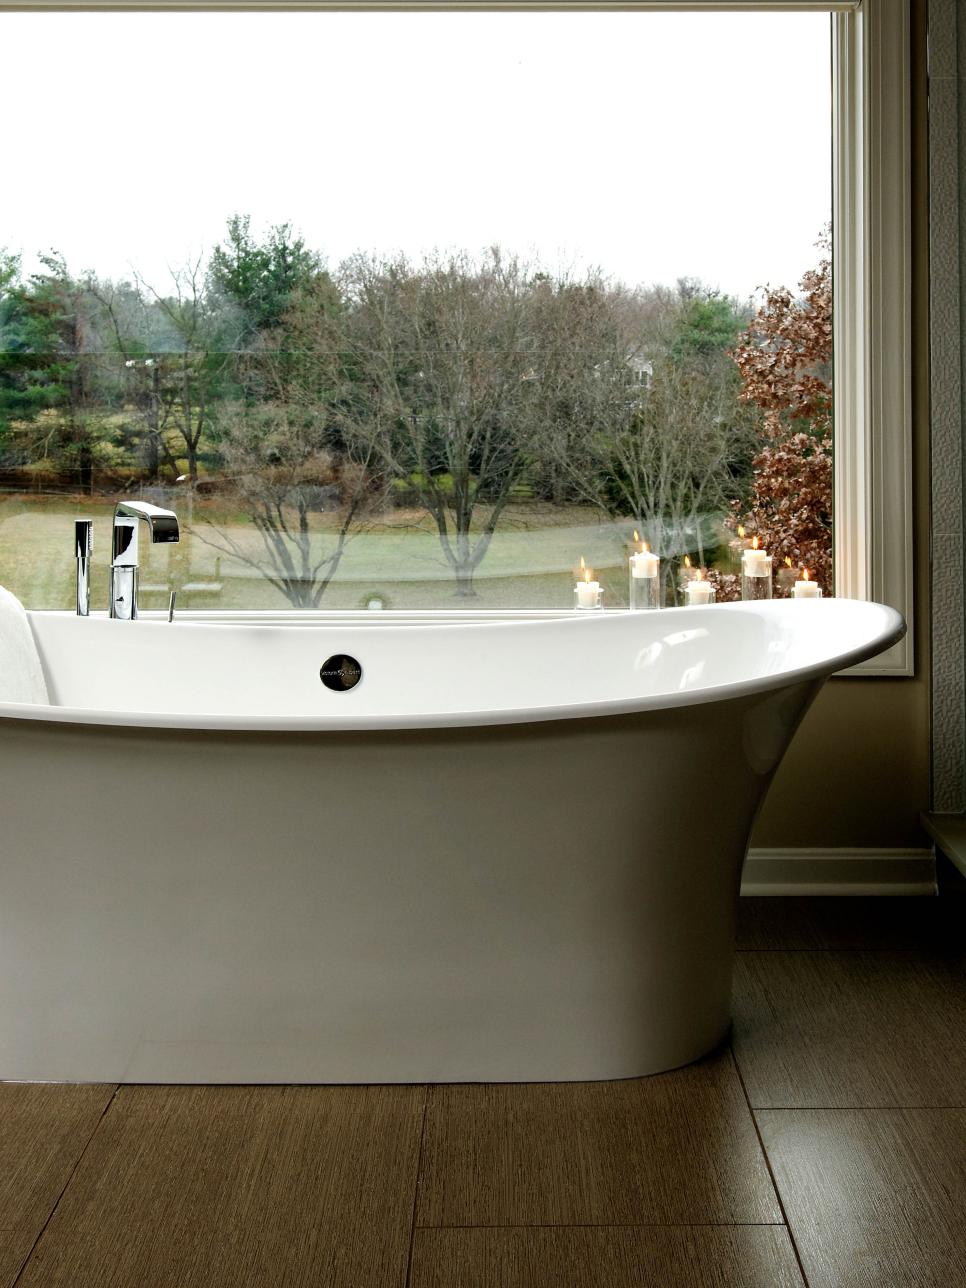 Contemporary Bathroom With Luxurious Freestanding Tub | HGTV